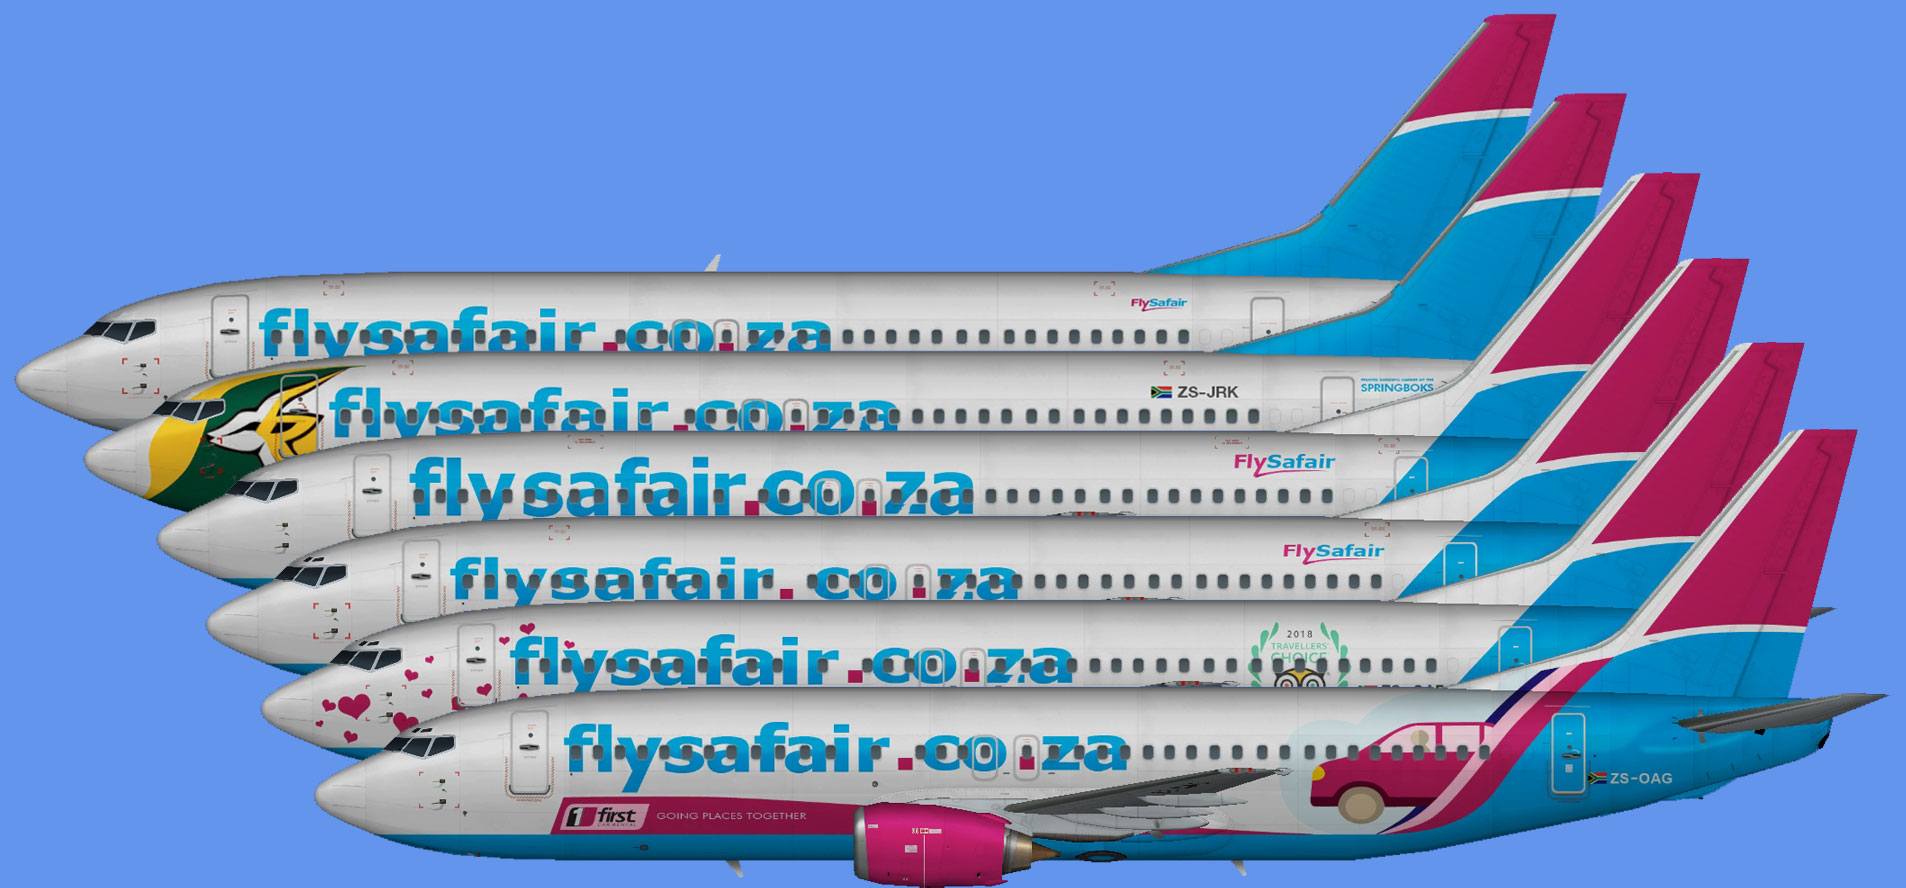 FlySafair Boeing 737-400 fleet 2019